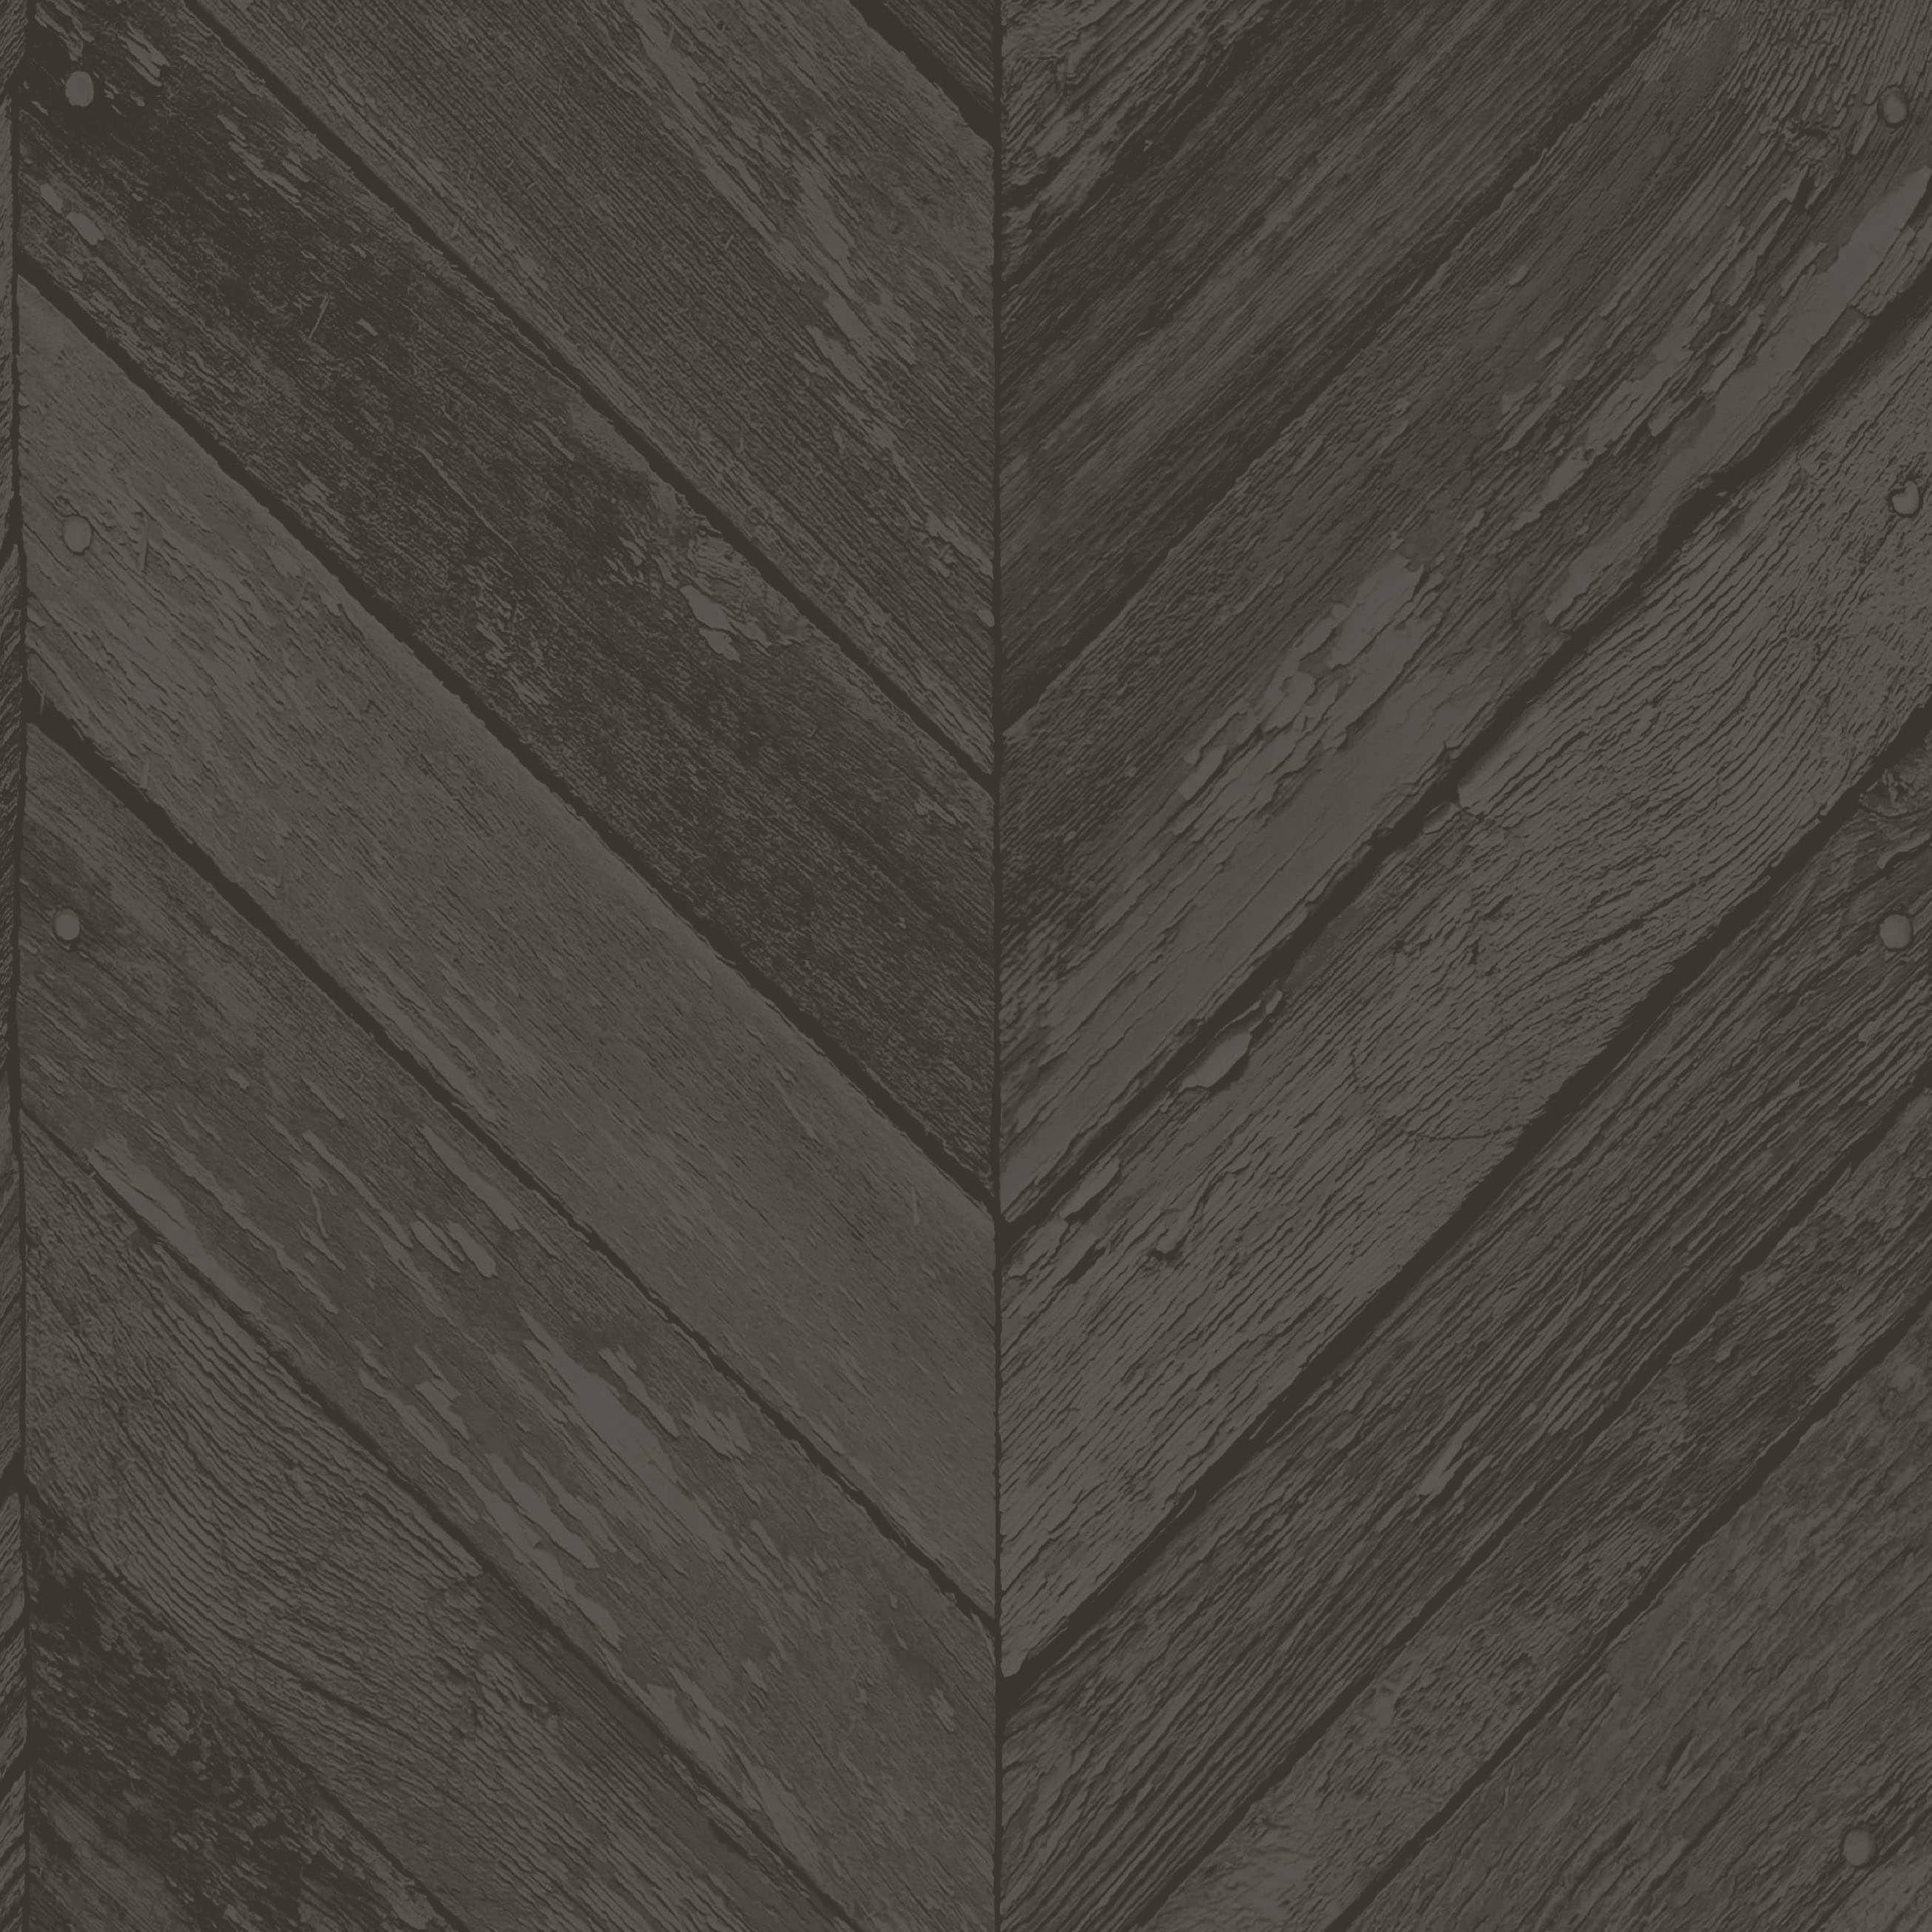 Light Gray Chevron Pattern Neutral Seamless Herringbone Wallpaper  Background Stock Vector  Illustration of blank fabric 88688766